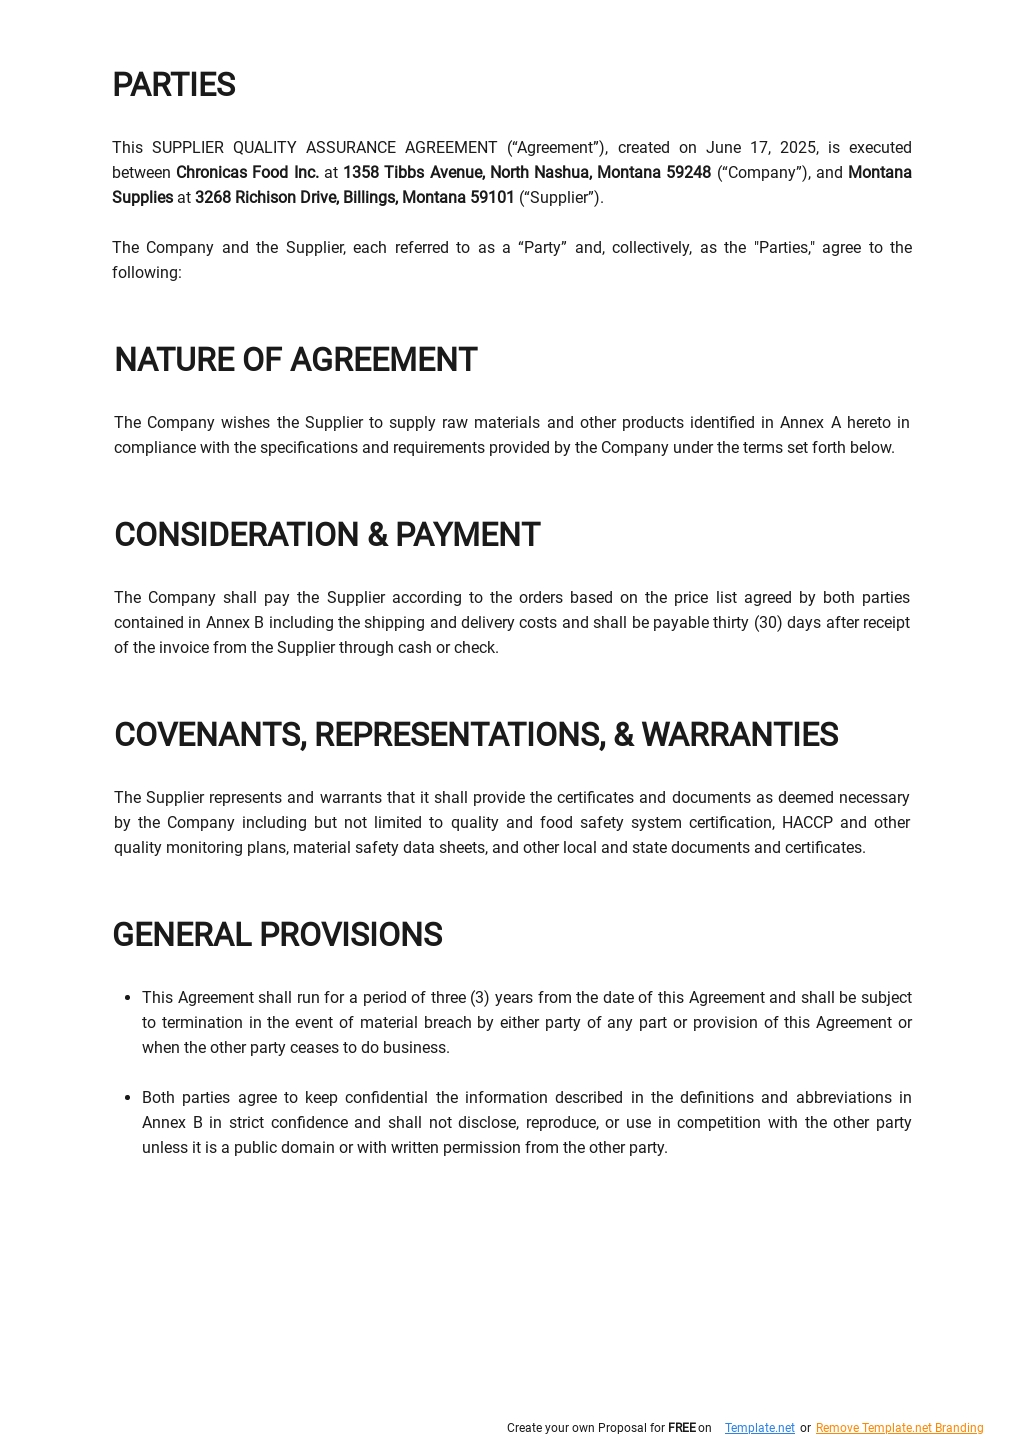 Supplier Quality Assurance Agreement Template - Google Docs, Word With supplier quality agreement template